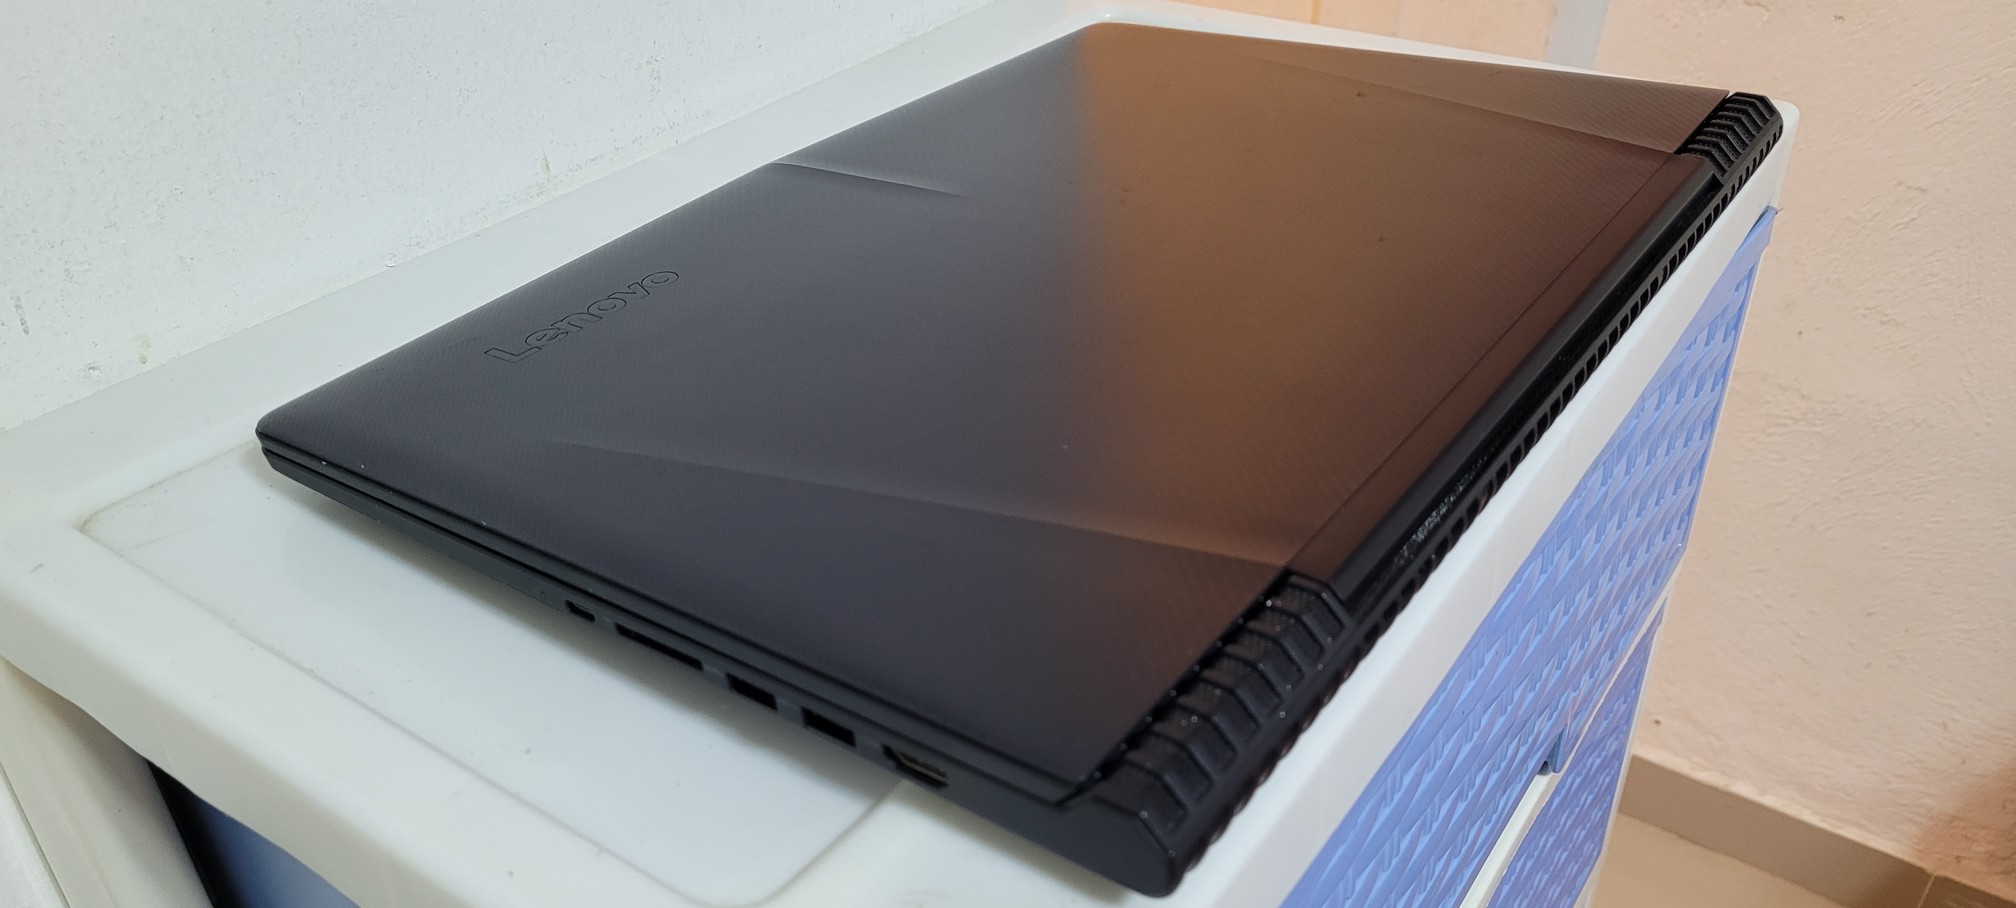 computadoras y laptops - Lenovo Legion Y520 17 Pulg Core i7 7ma Ram 16gb Disco 512 Y 1TB Gtx 1070ti 4gb 2